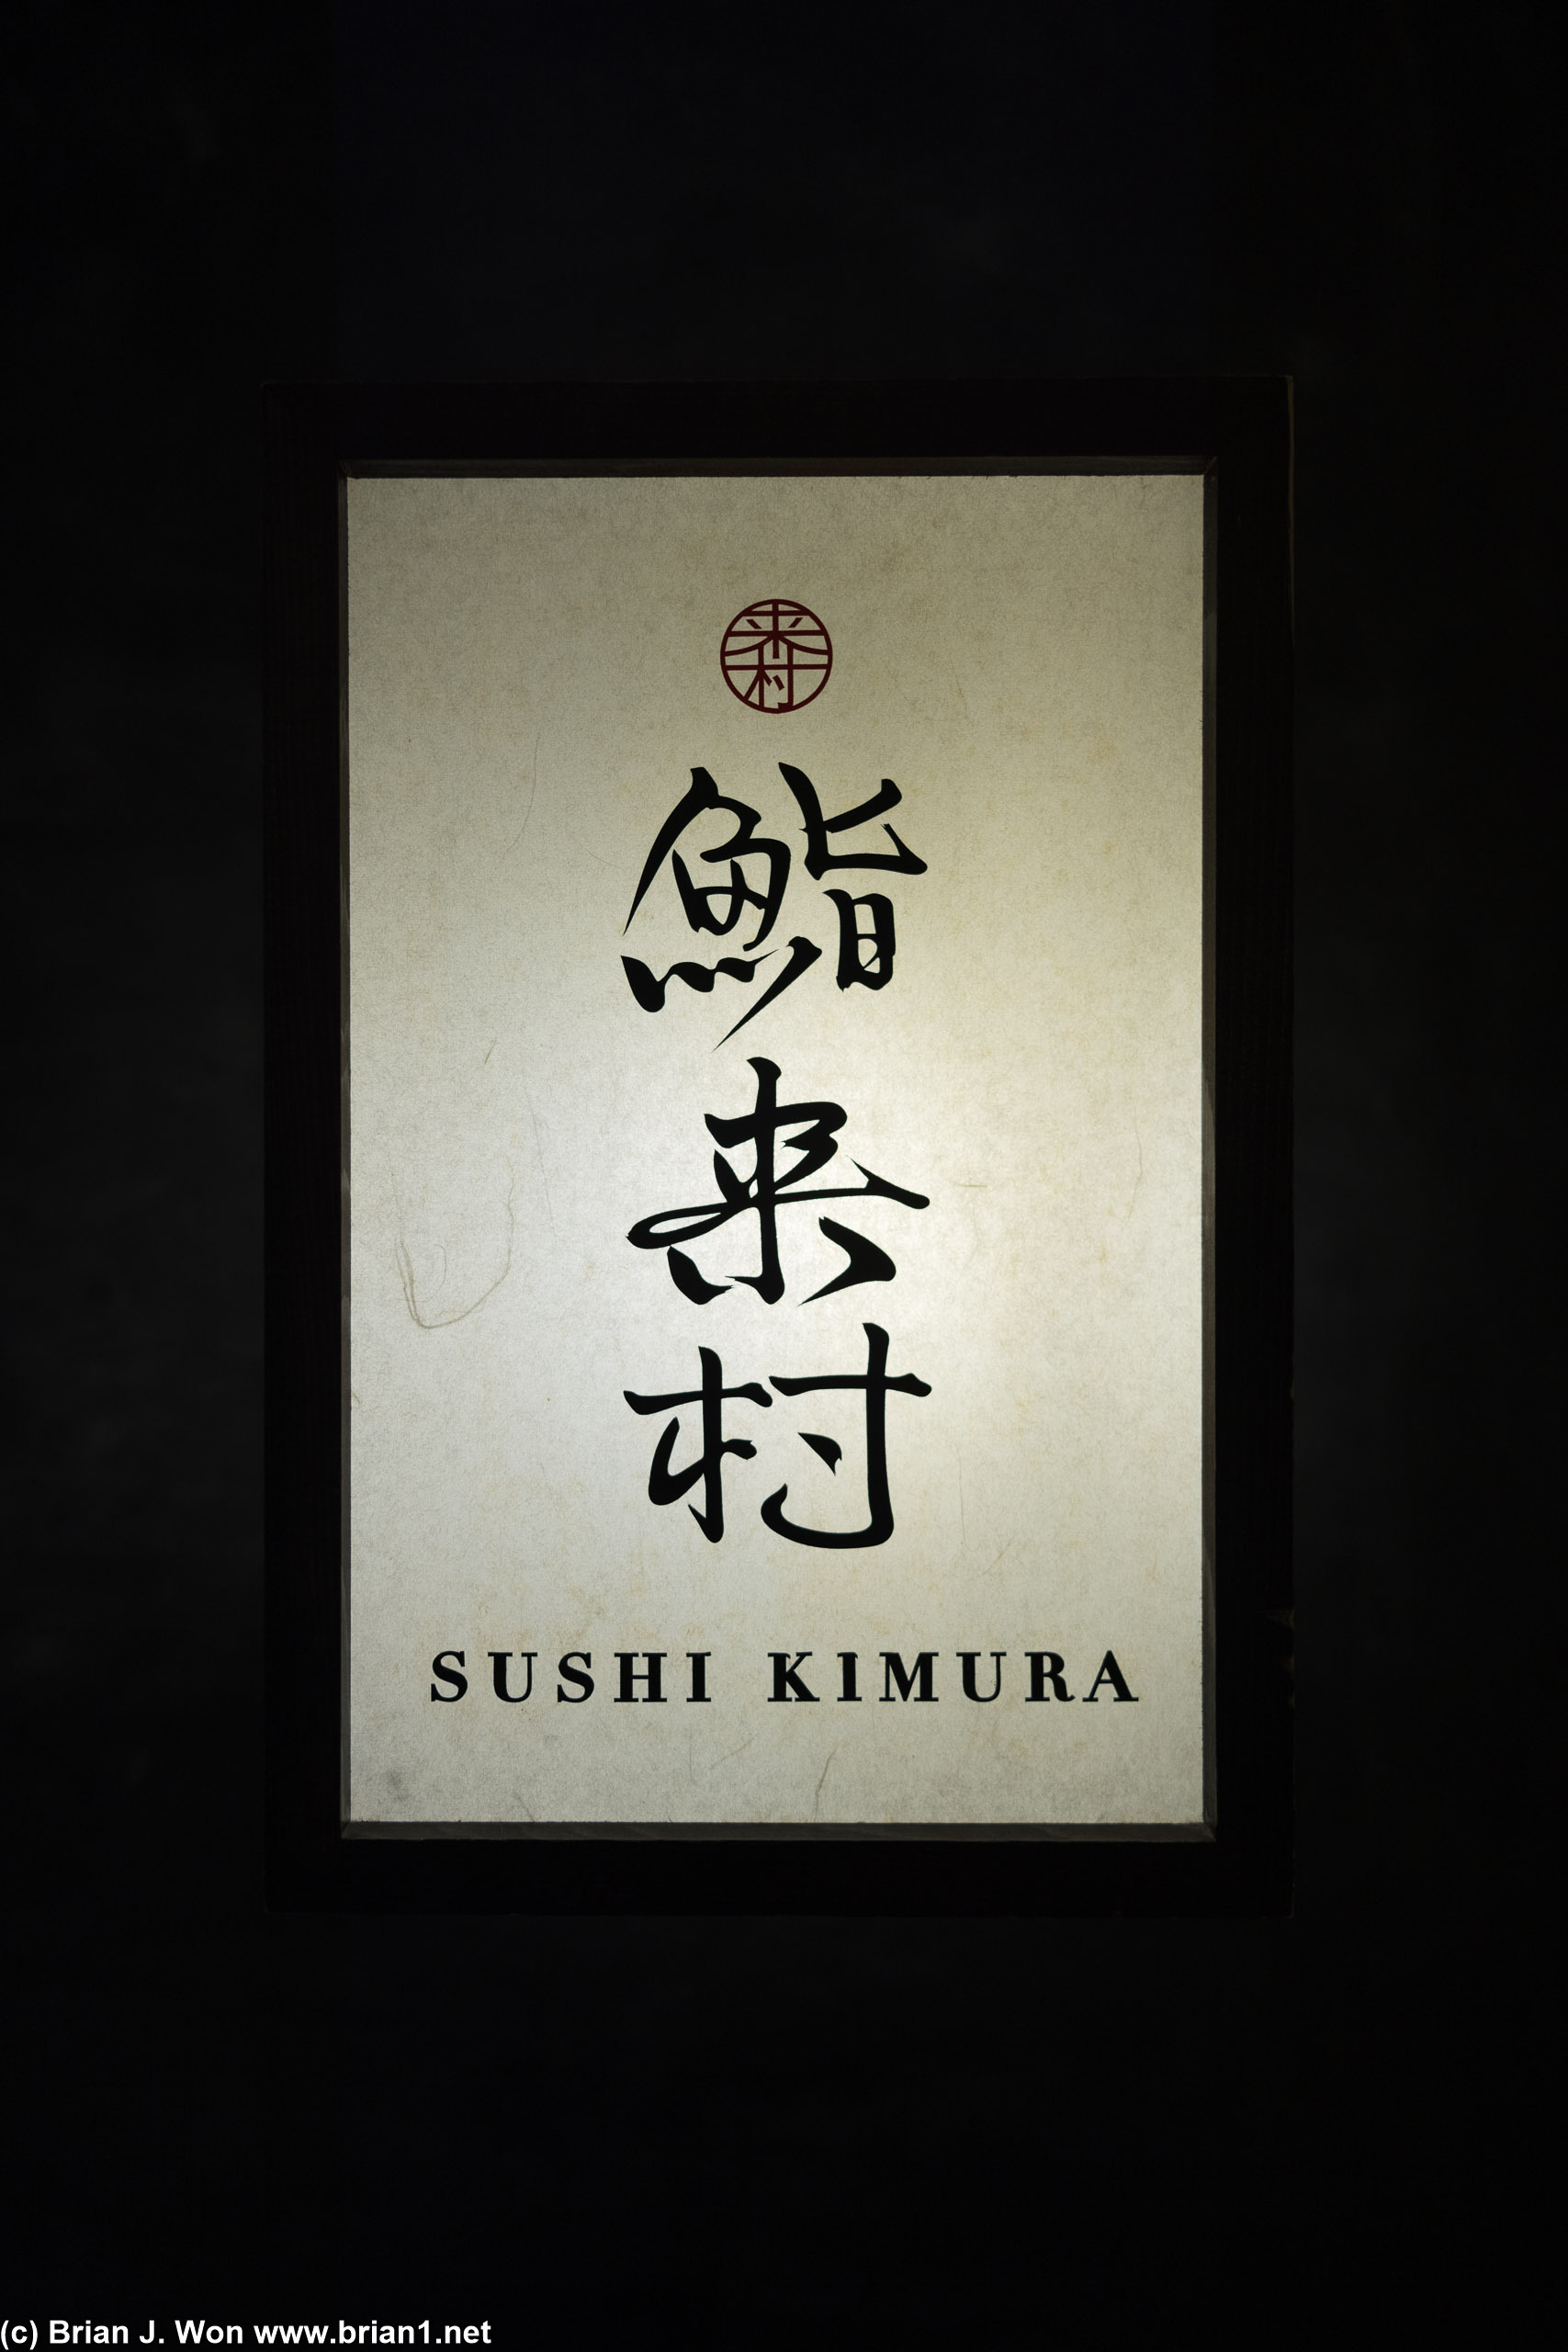 Sushi Kimura, one building over.